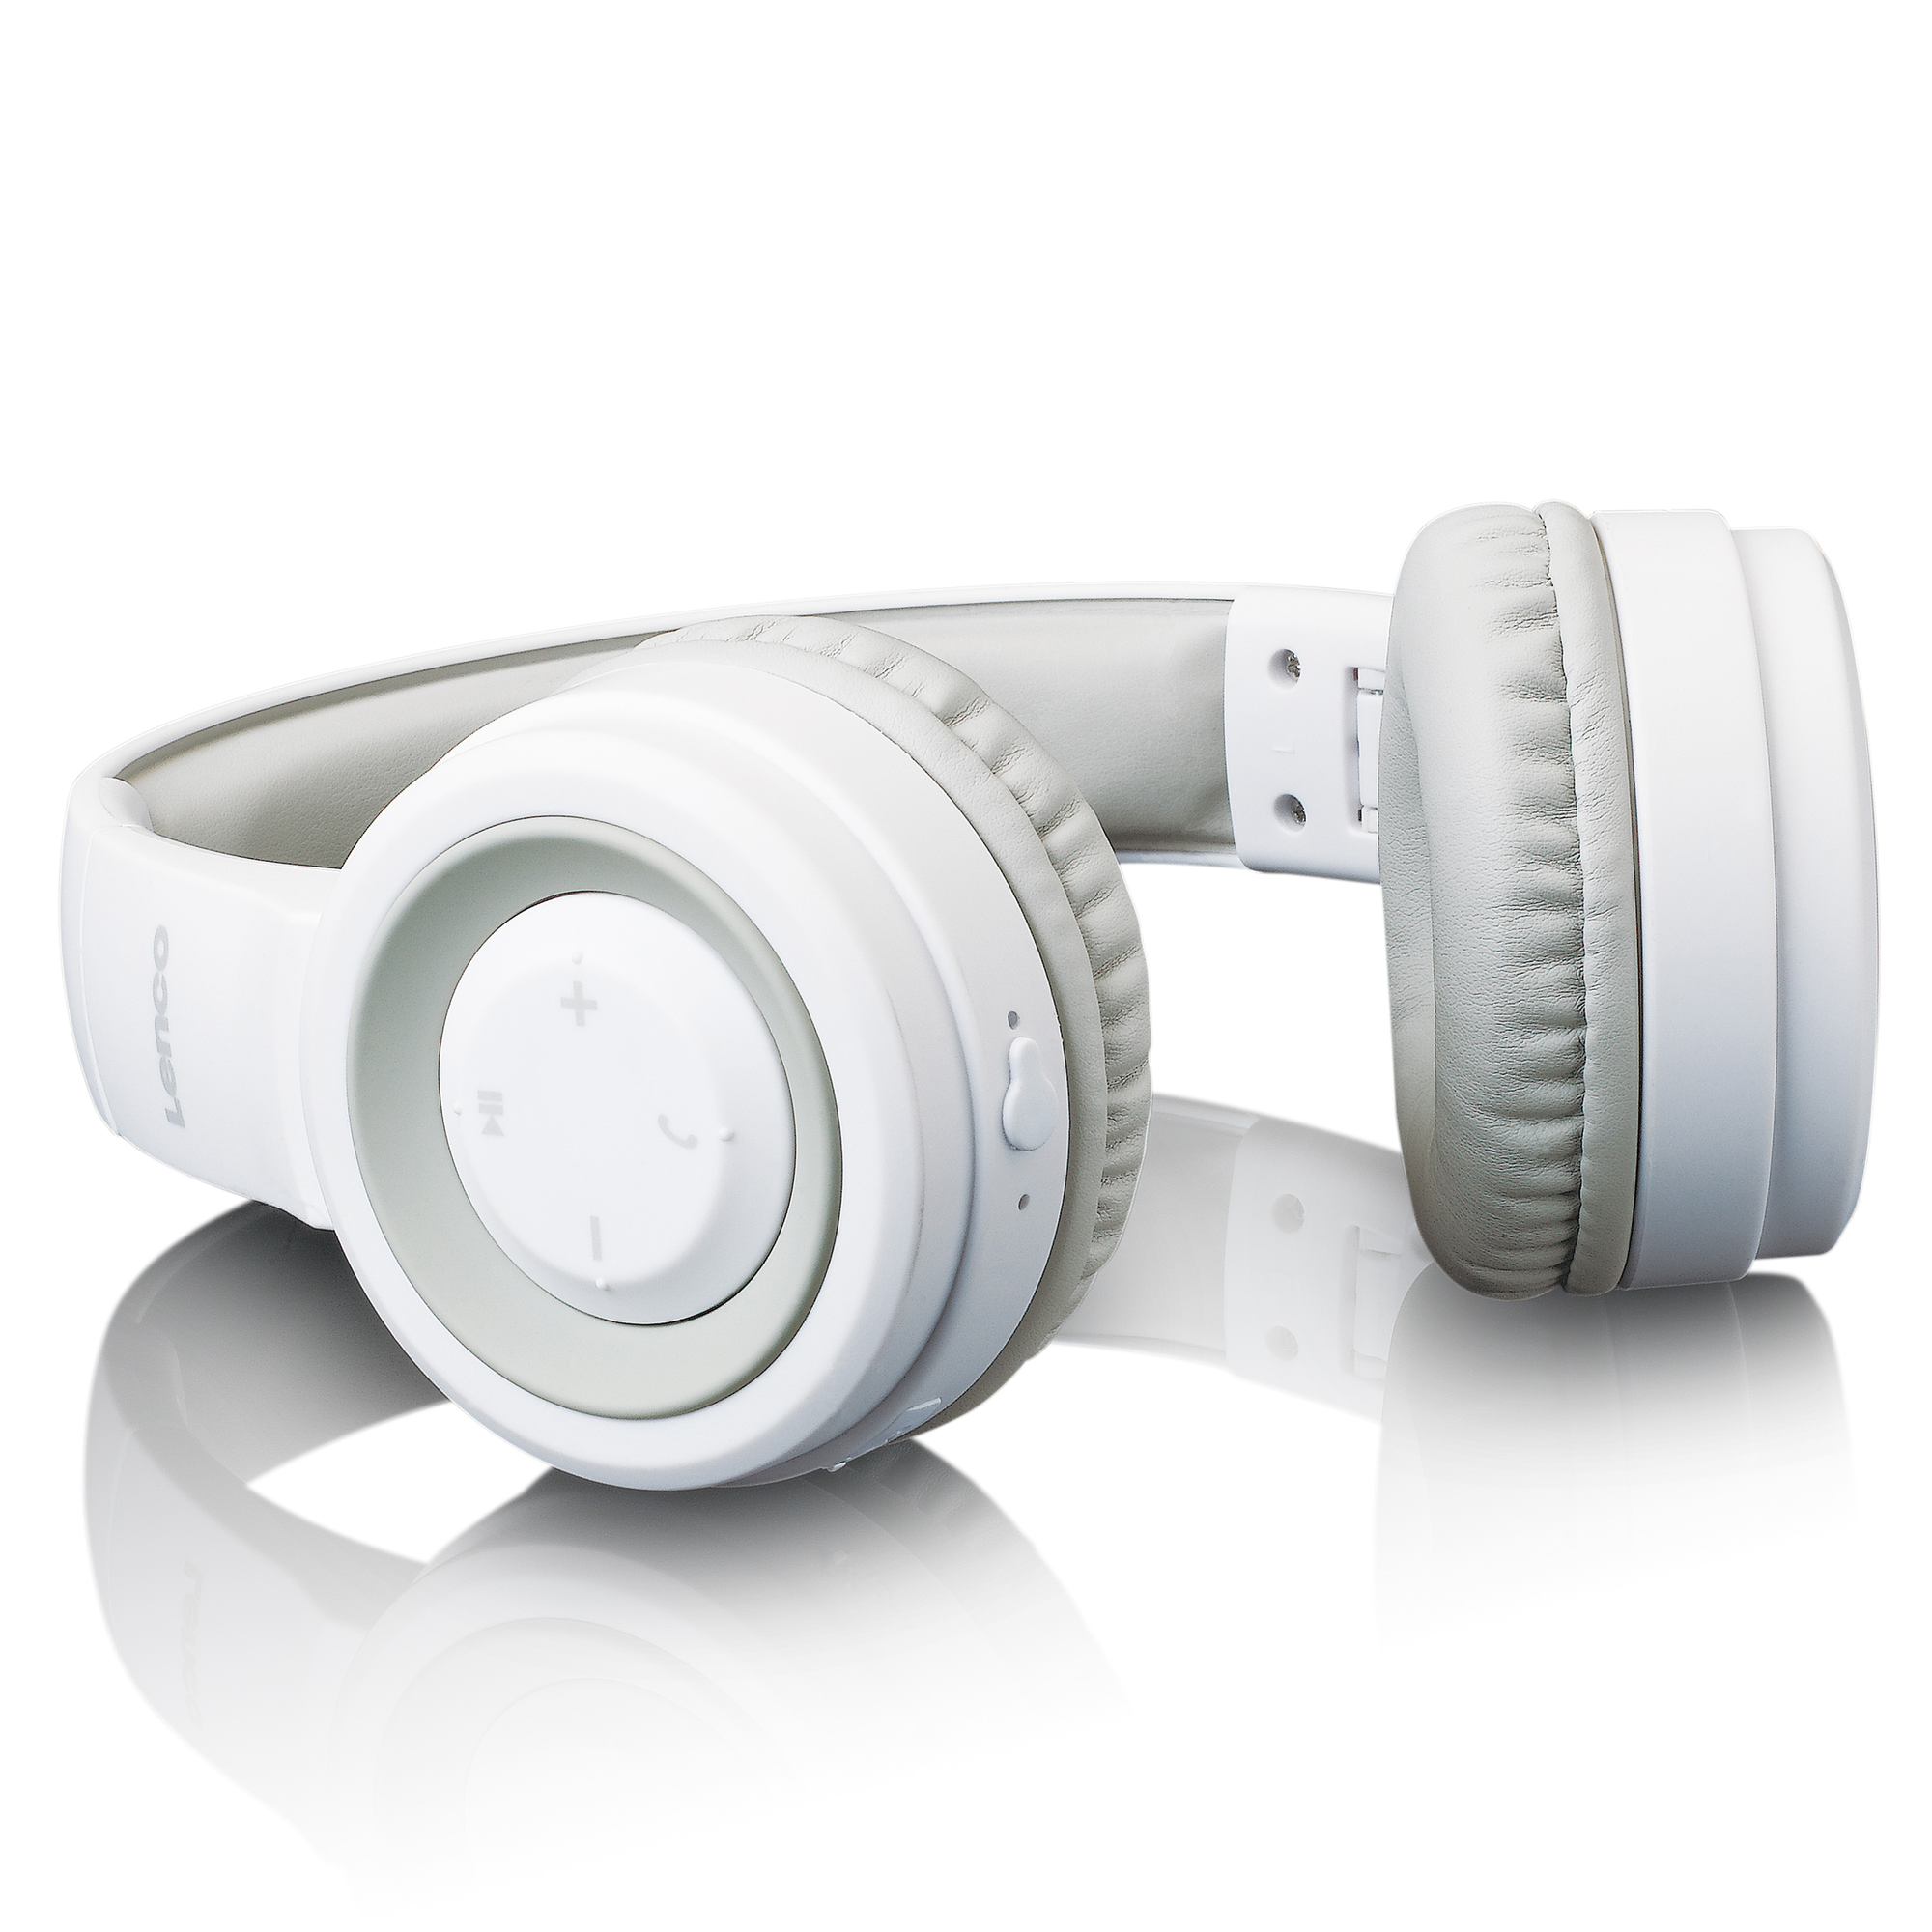 Bluetooth Bluetooth Spritzwassergeschützt Weiß - LENCO HPB-330WH Headphone -, On-ear